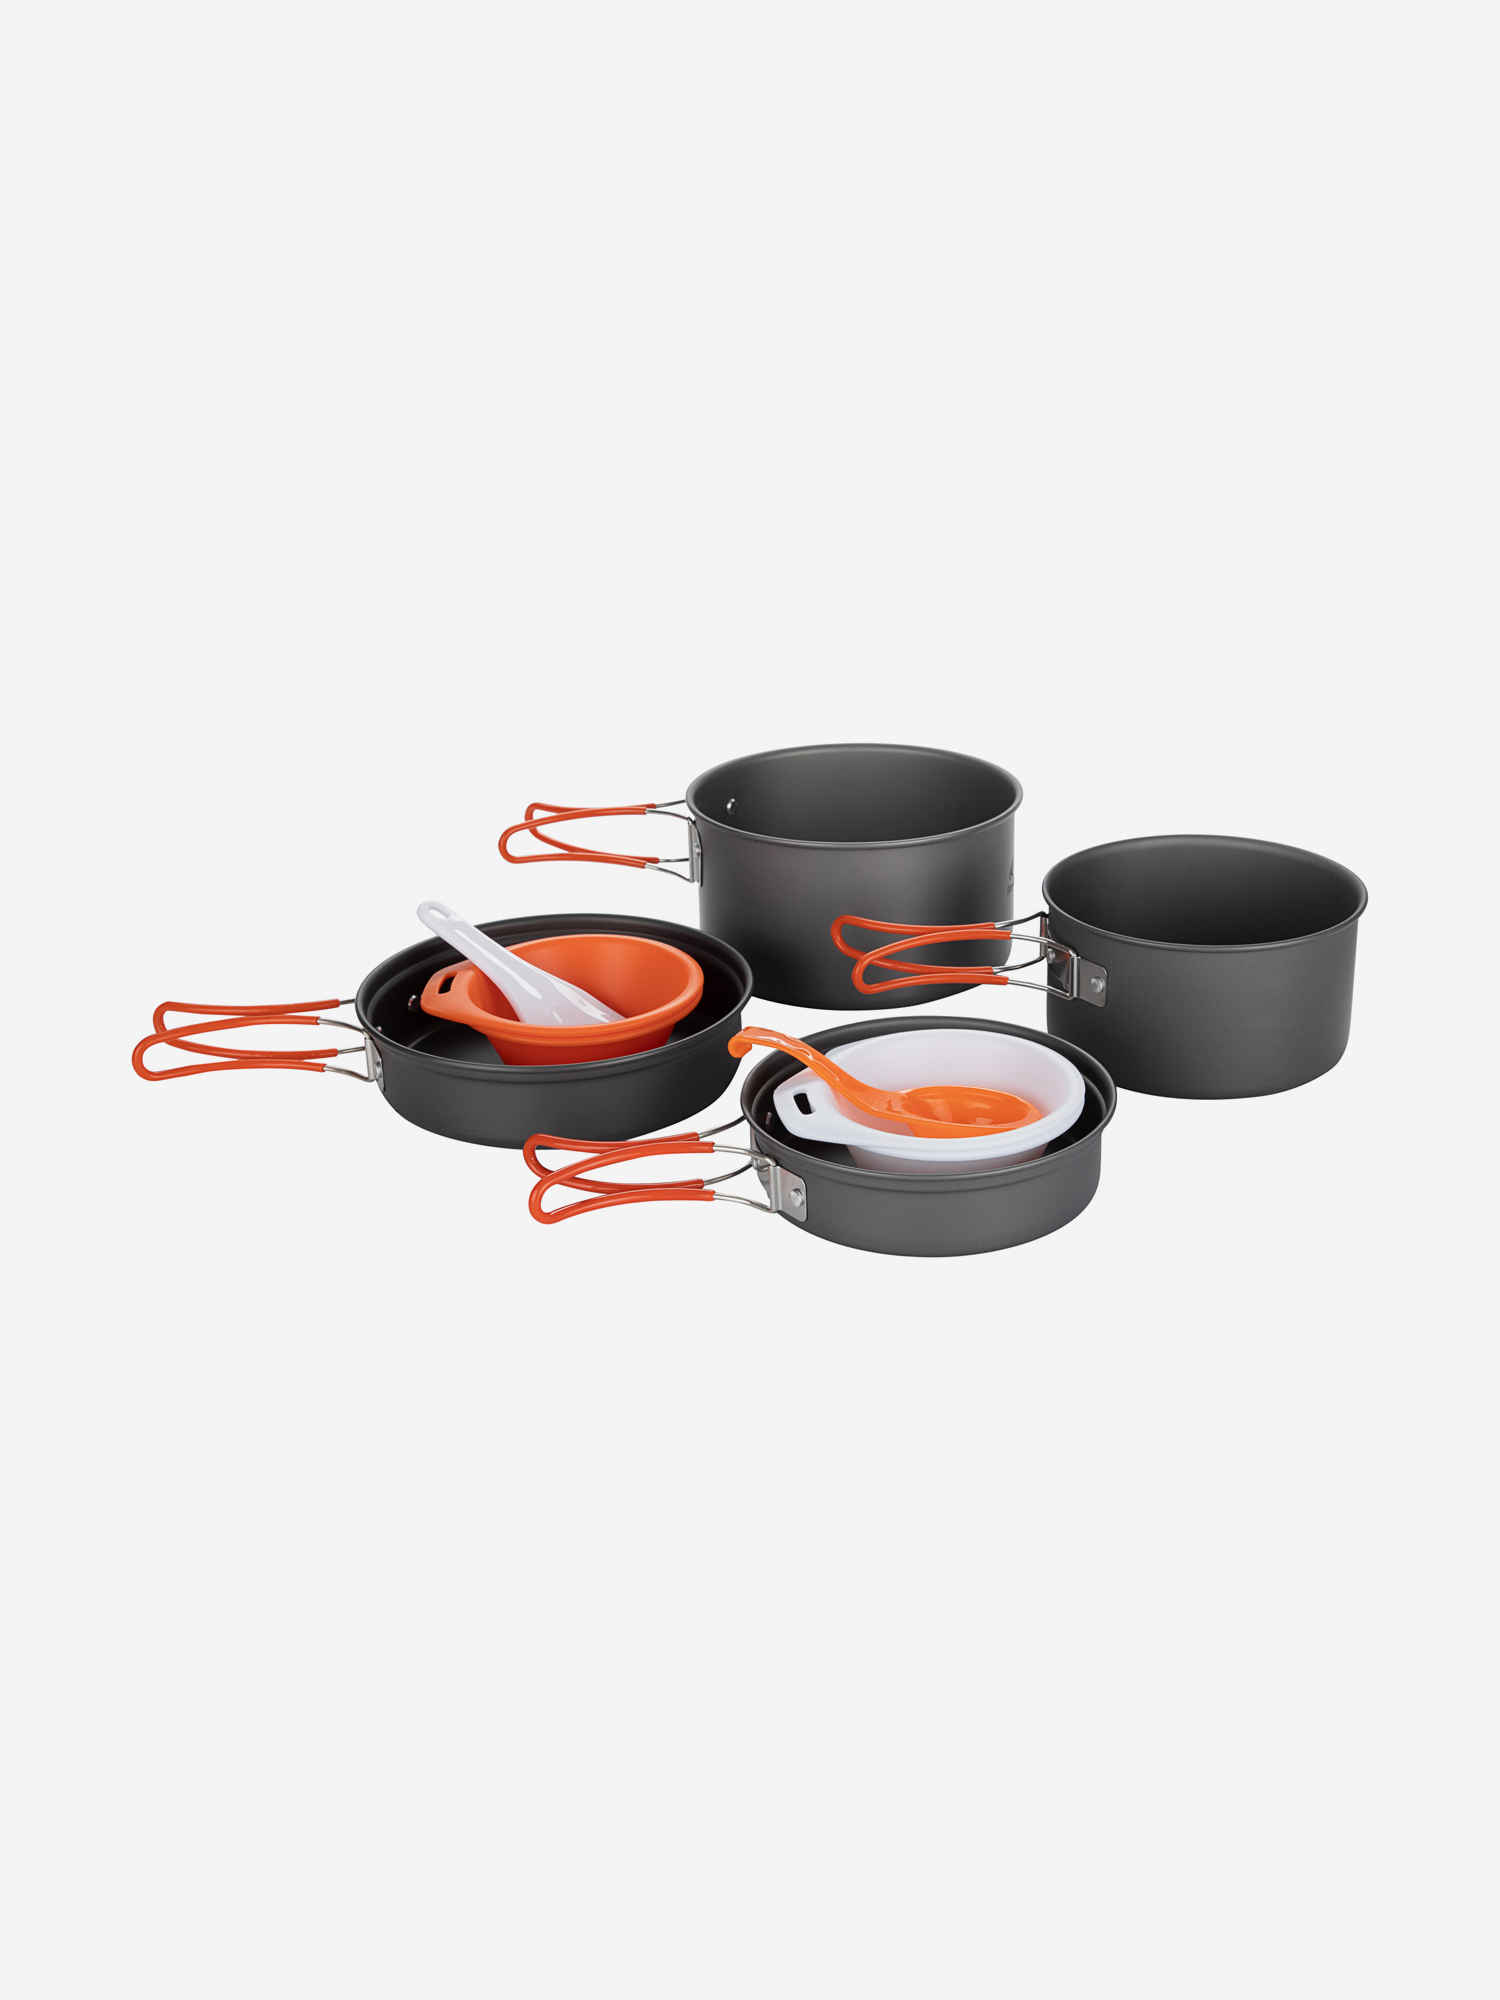 Набор посуды: 2 котелка, 2 сковороды Fire-Maple FMC-K7, Серый набор посуды fire maple gourmet set серый